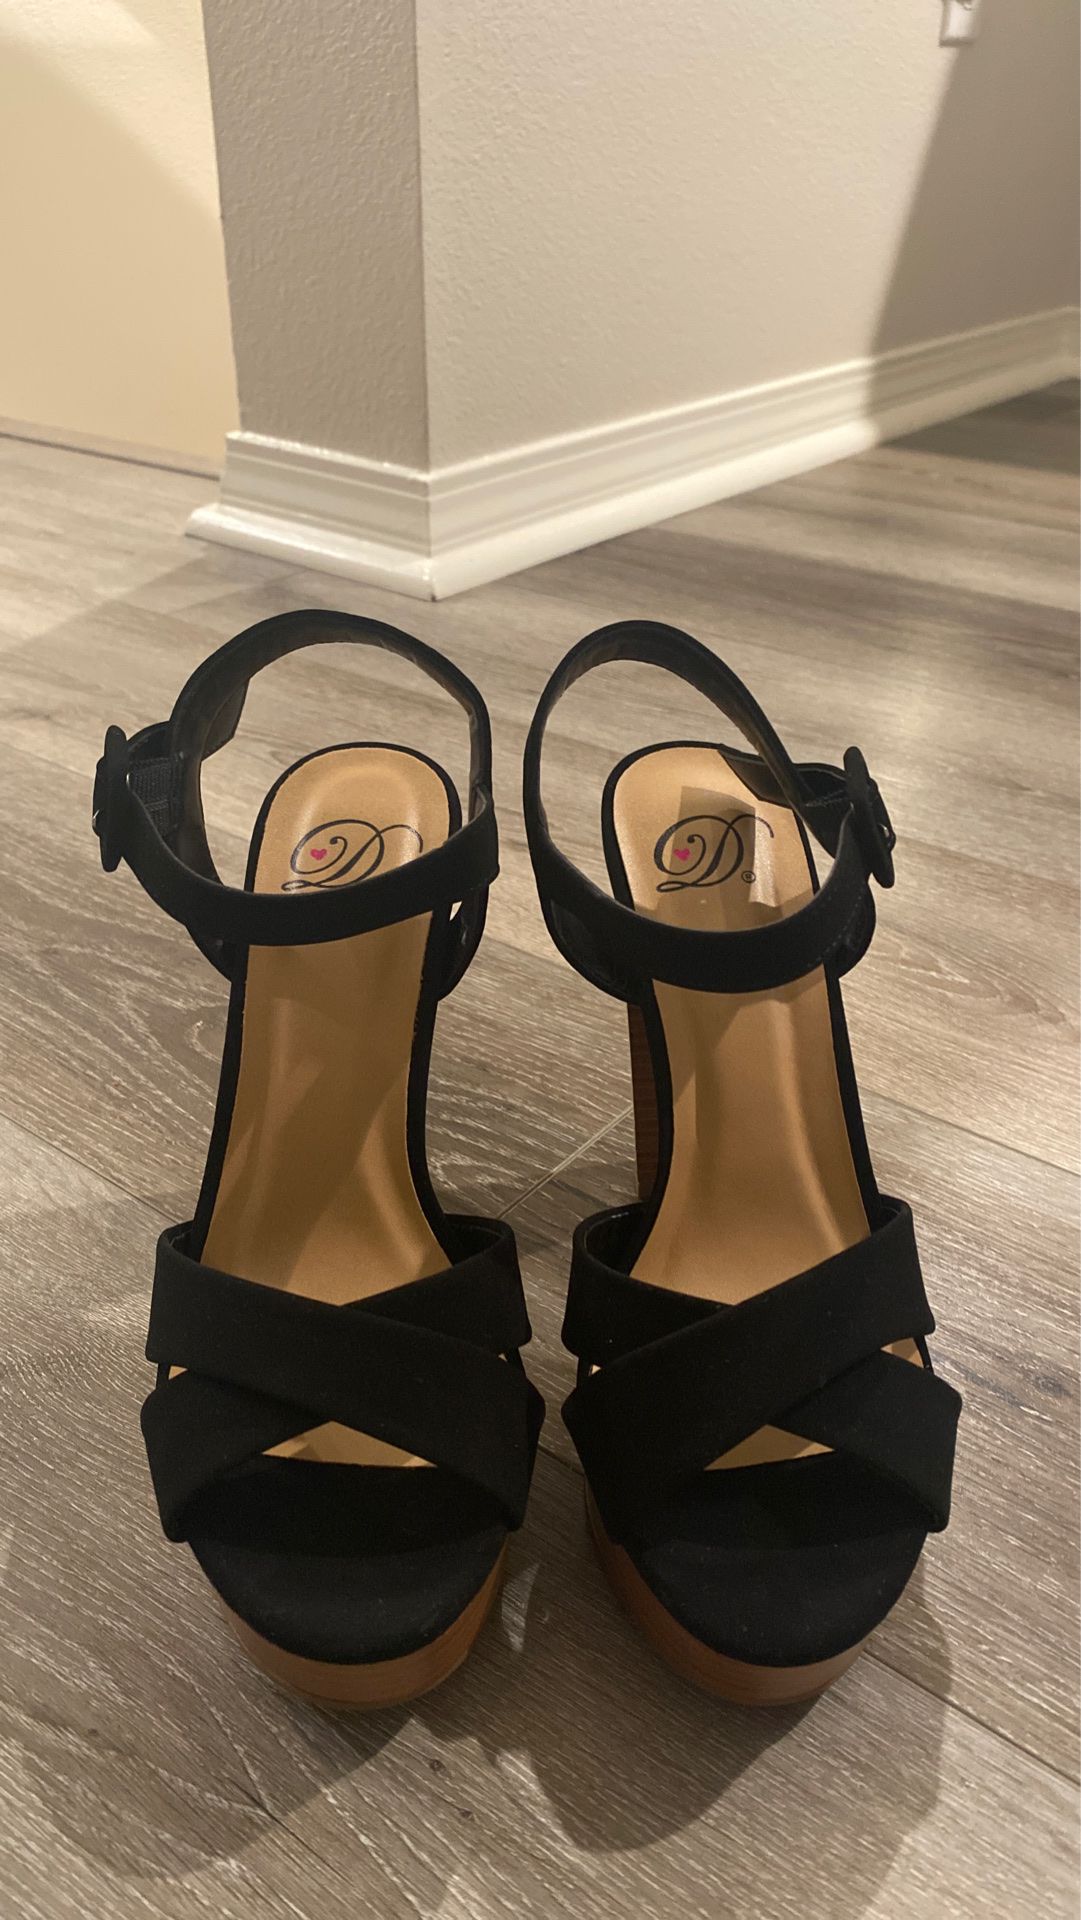 Brand new heels size 5.5